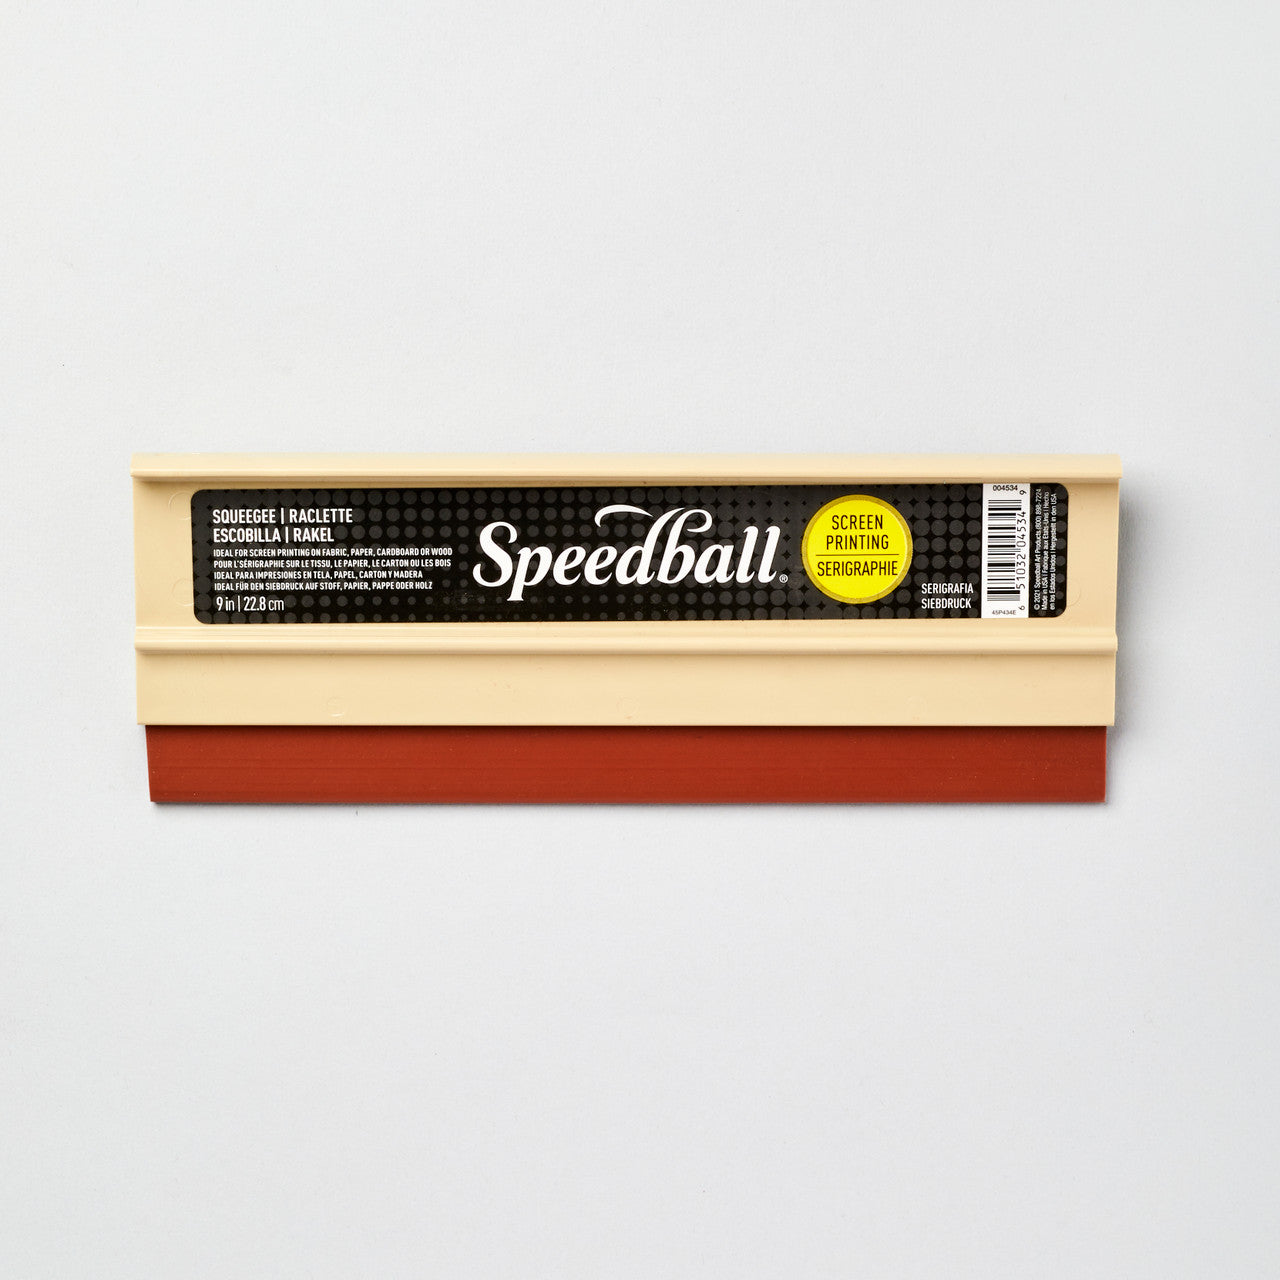 Escobilla de goma para manualidades Speedball - Mango de plástico de 9 pulgadas